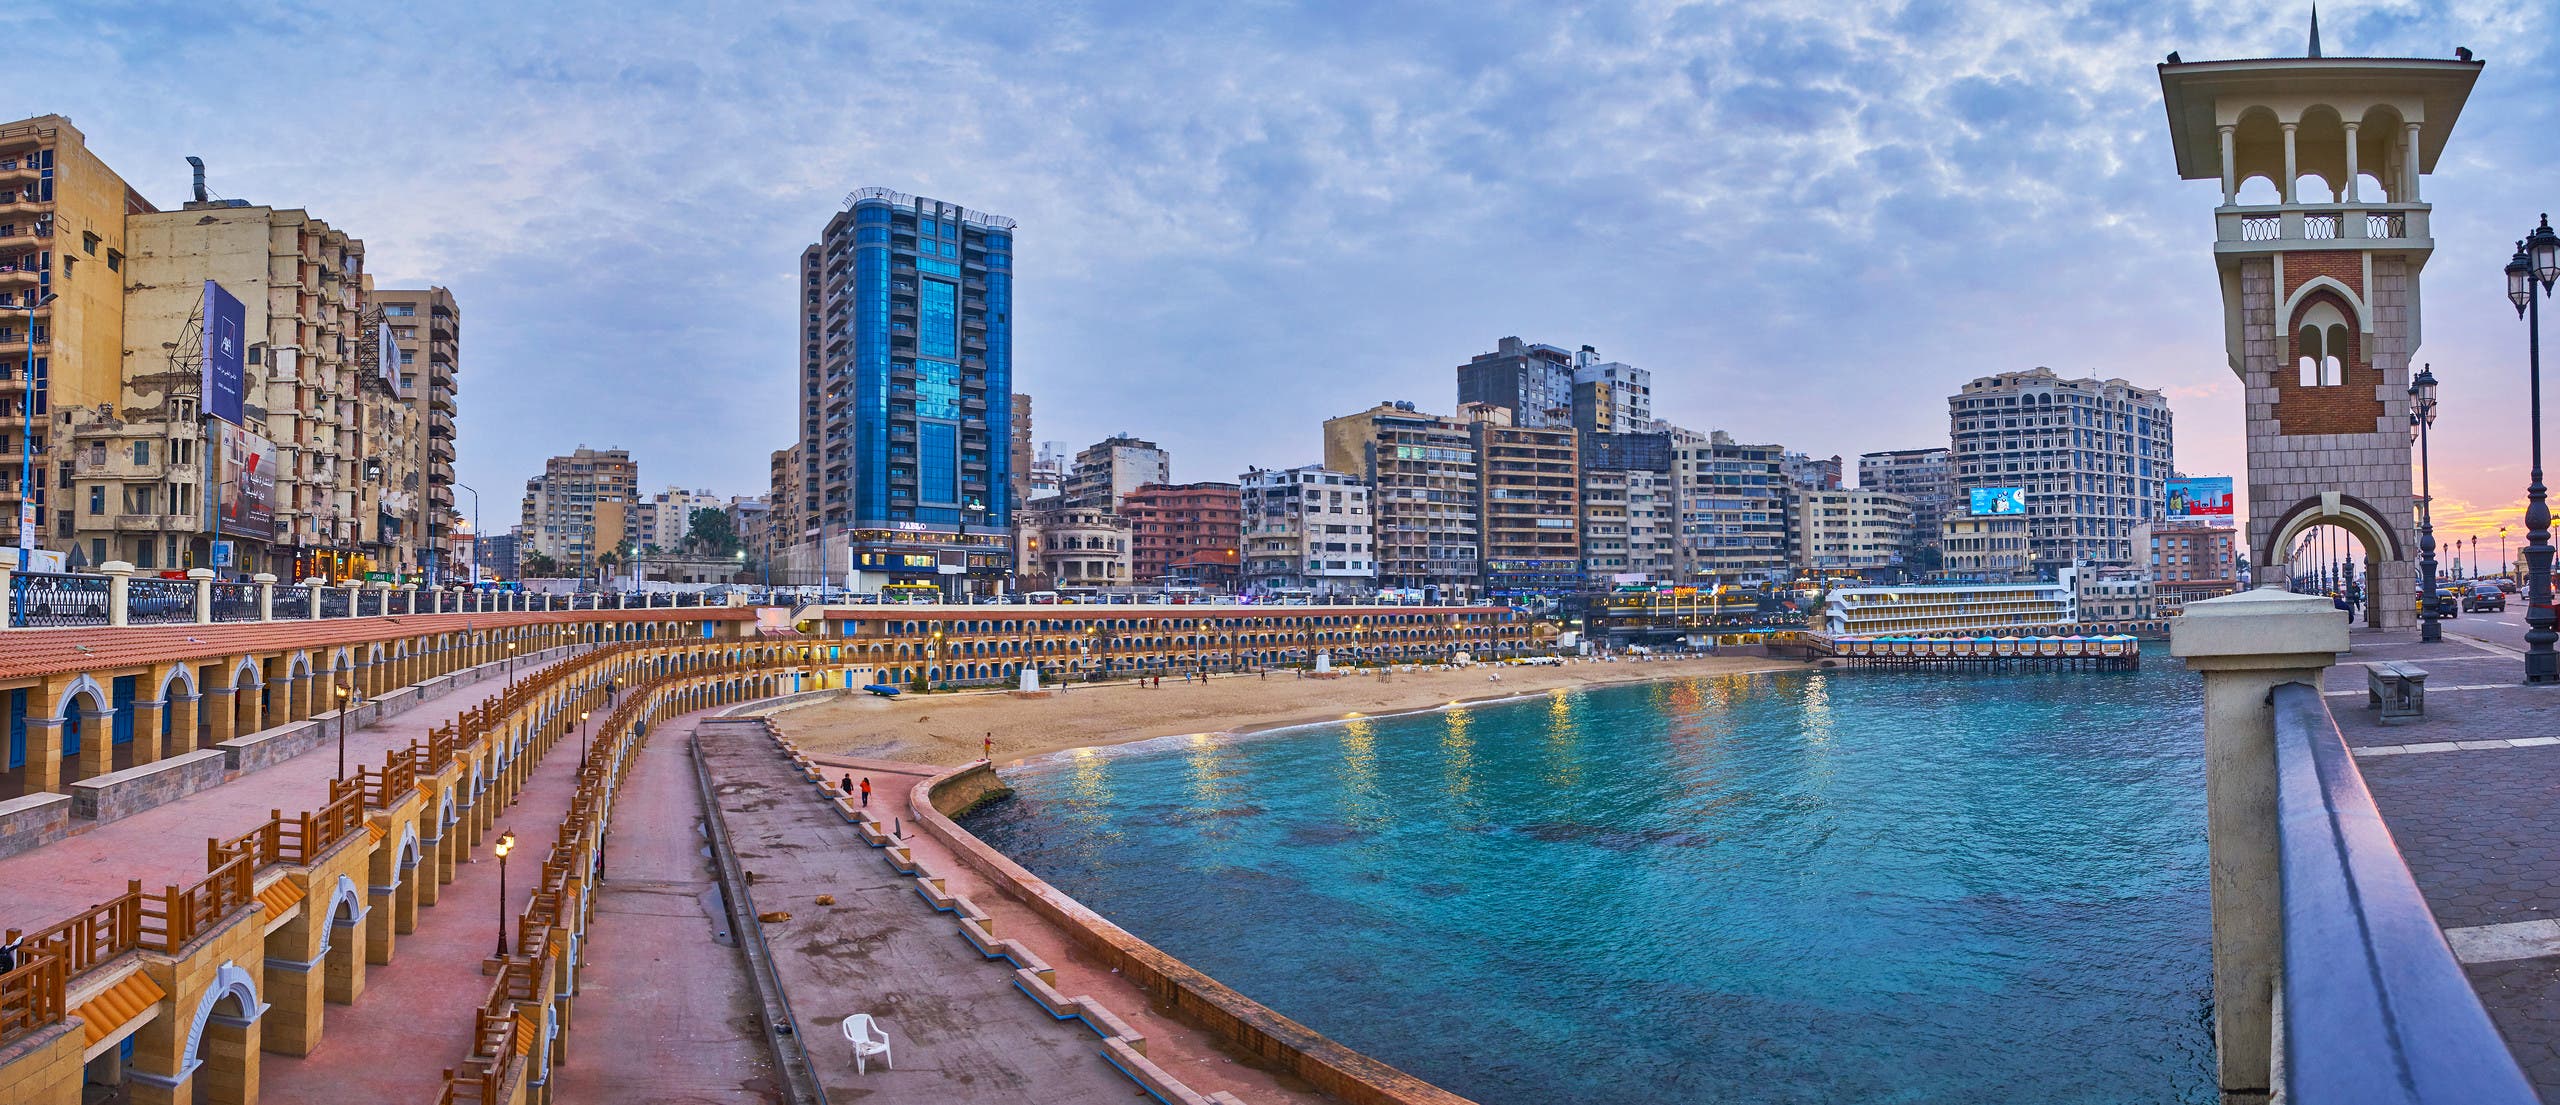 Alexandria, Egypt corniche. (Shutterstock)